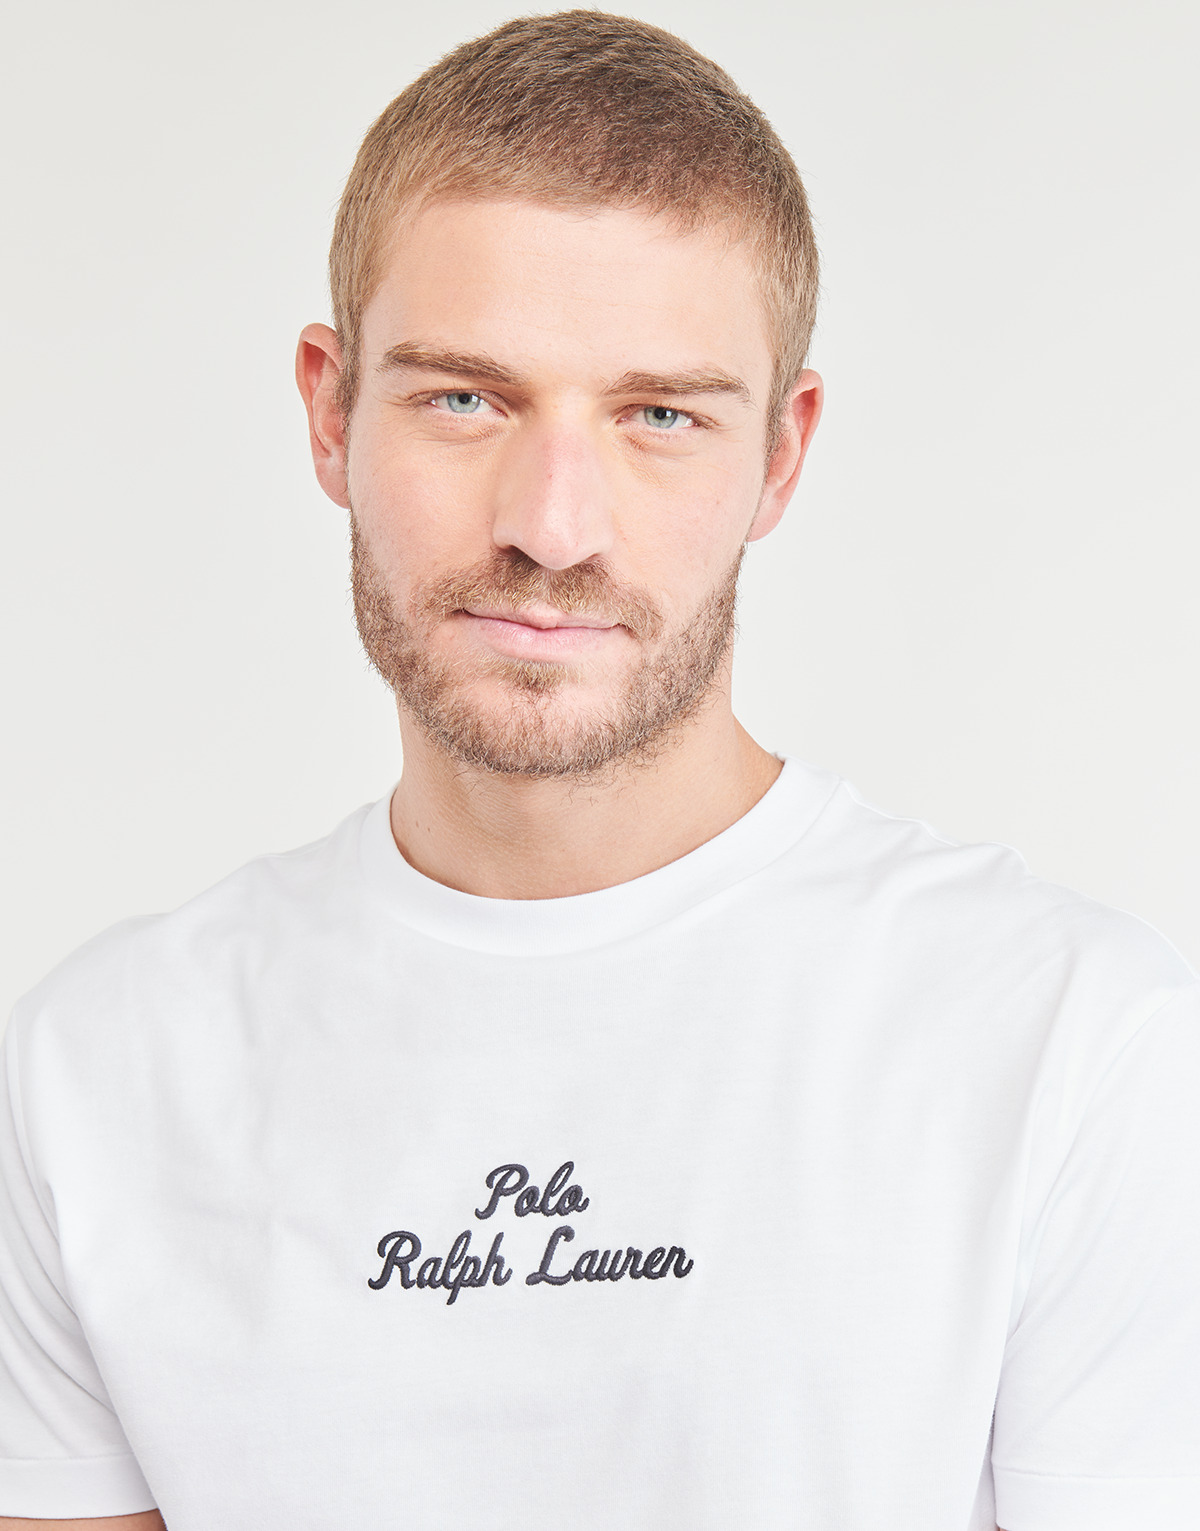 Polo Ralph Lauren Blanc T-SHIRT AJUSTE EN COTON POLO RALPH LAUREN CENTER fssfG4xd